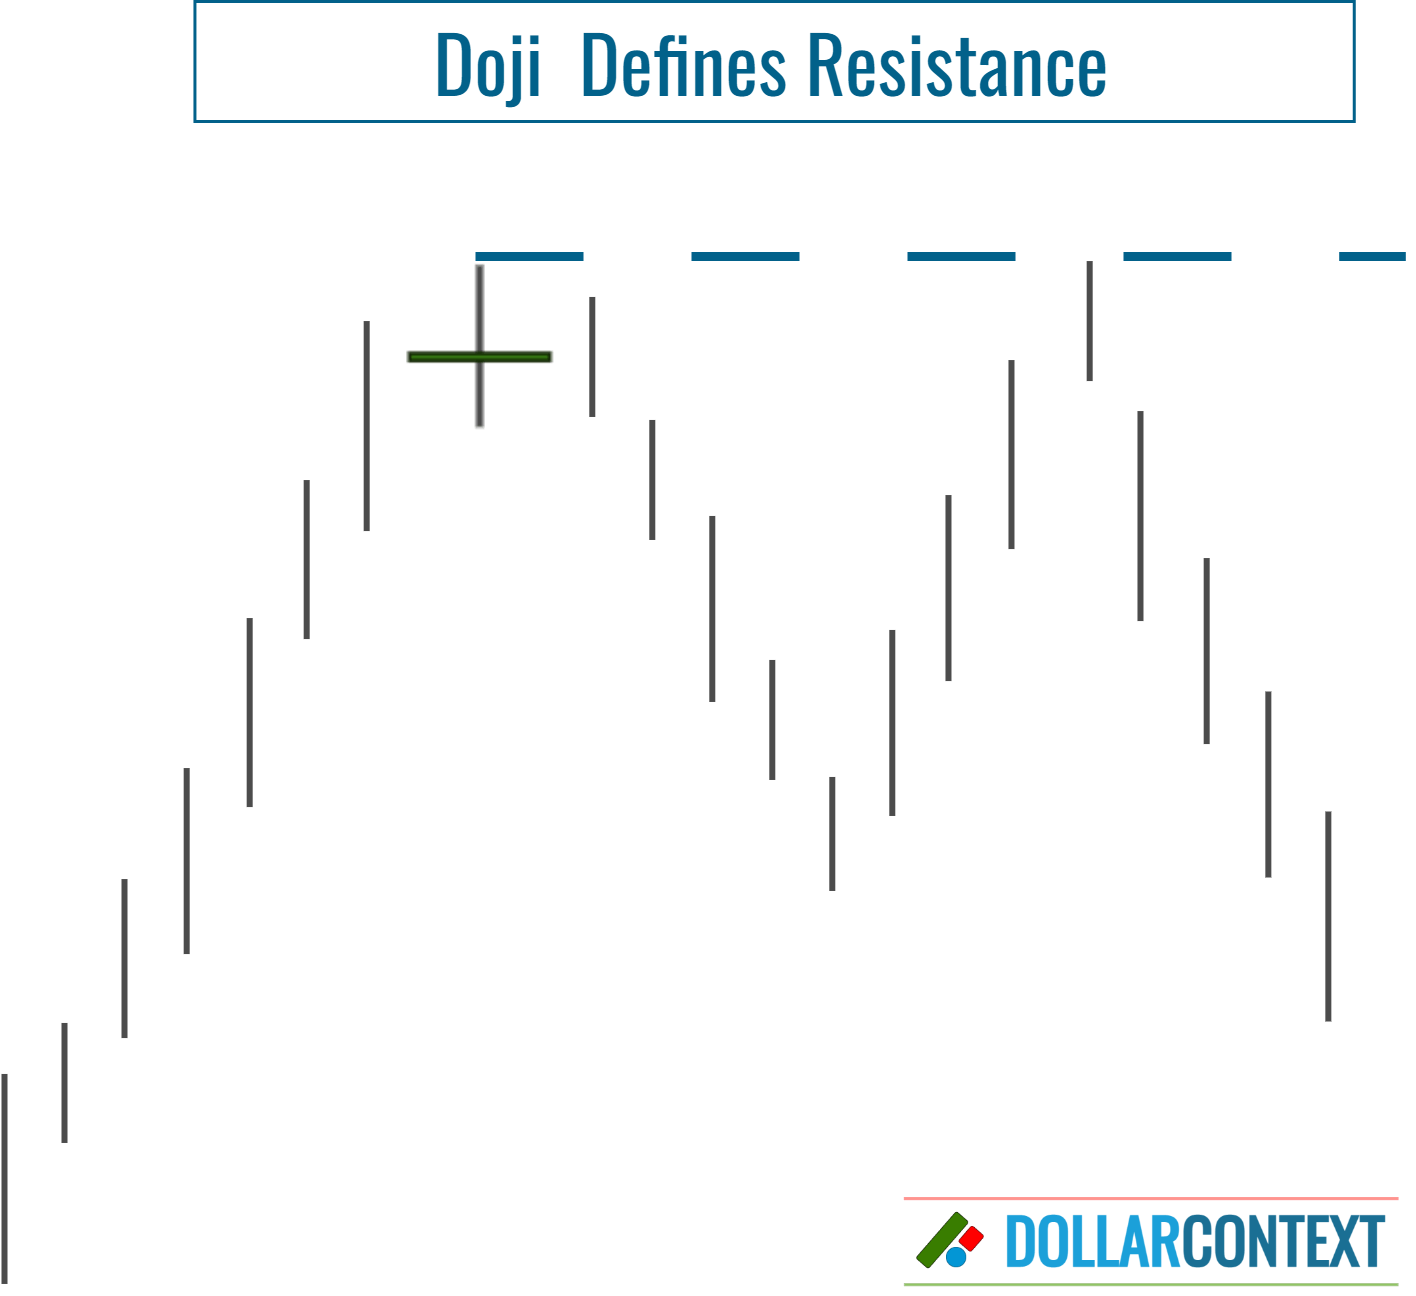 Doji Becomes Resistance After an Uptrend